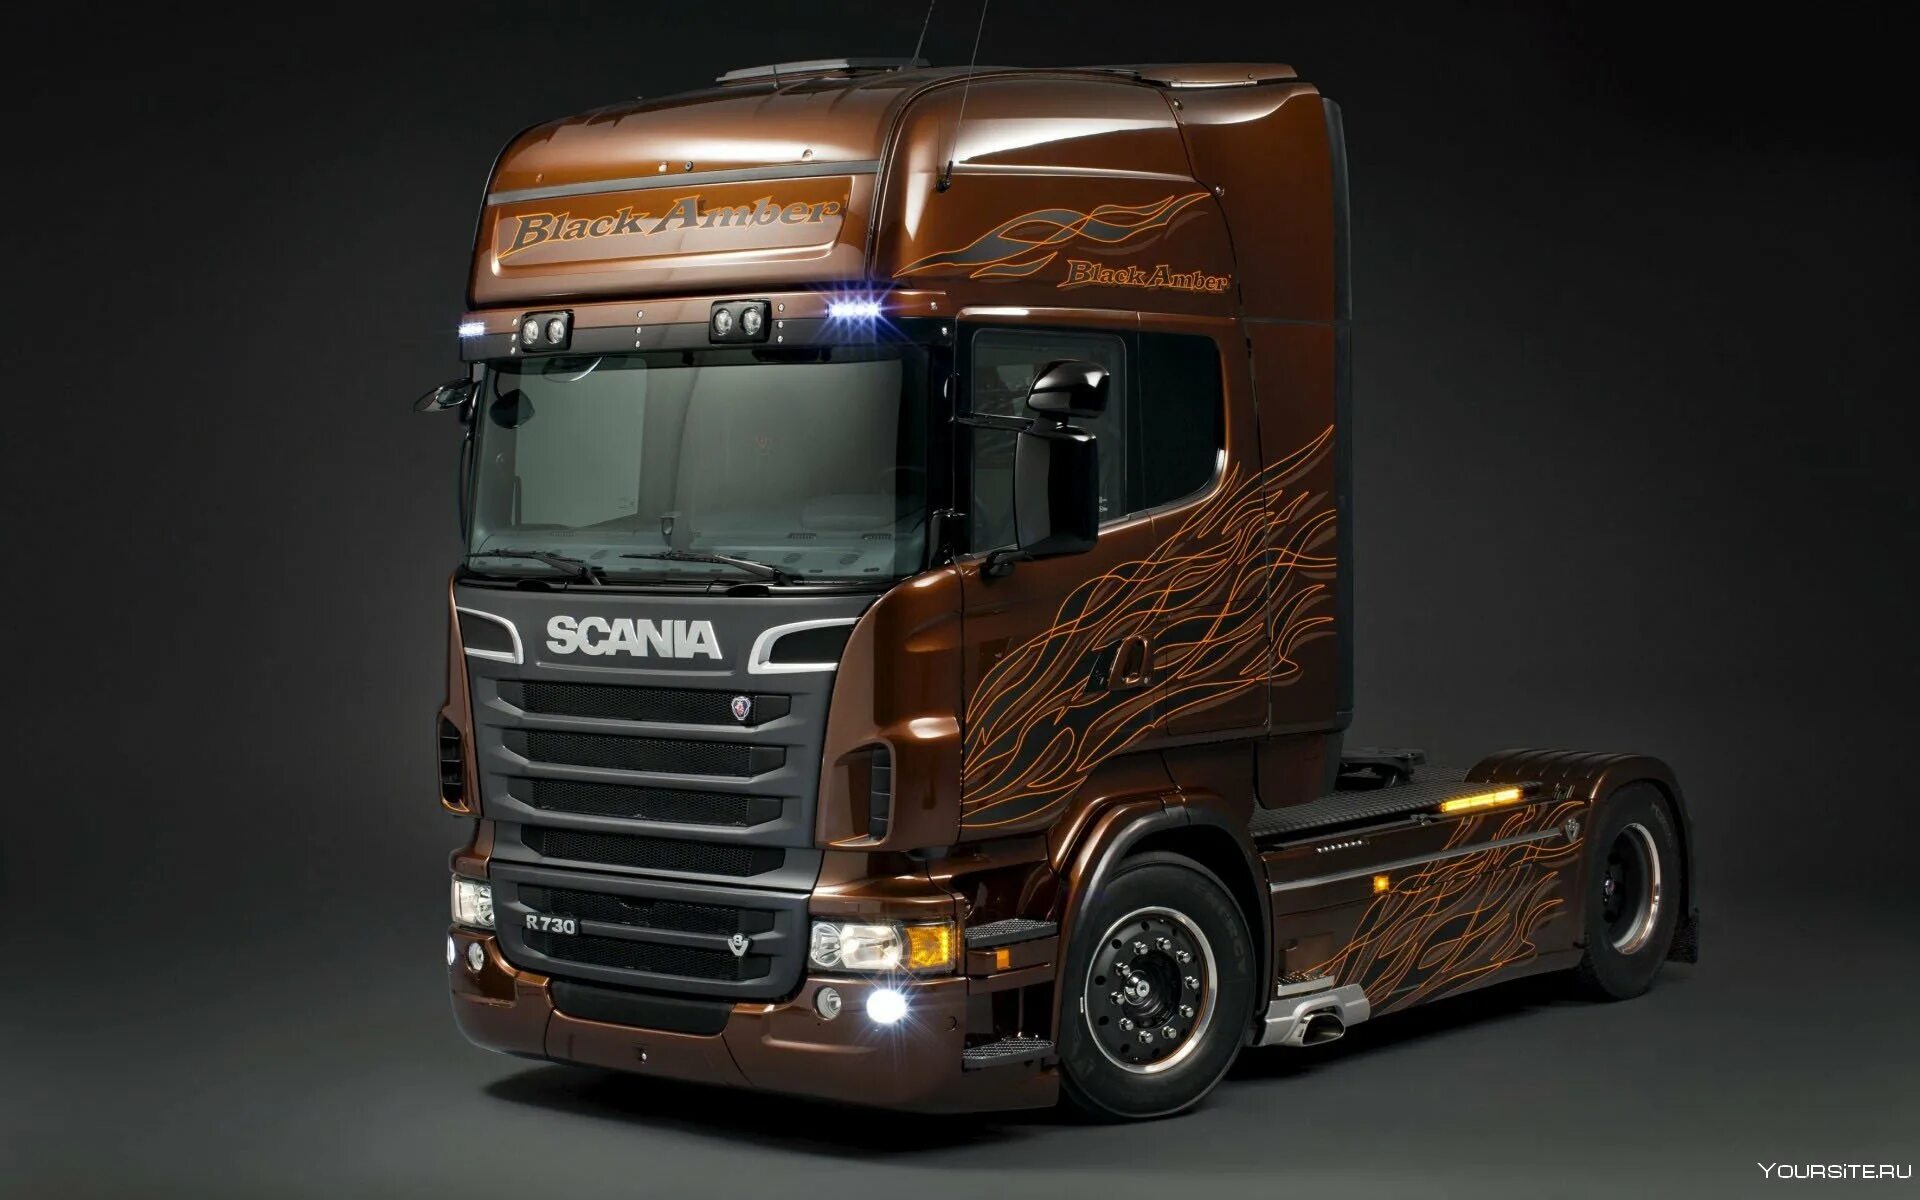 Сканиа. Scania r730 10x4. Scania r730 Black Amber. Scania r730 Black. Скания r730 новая.